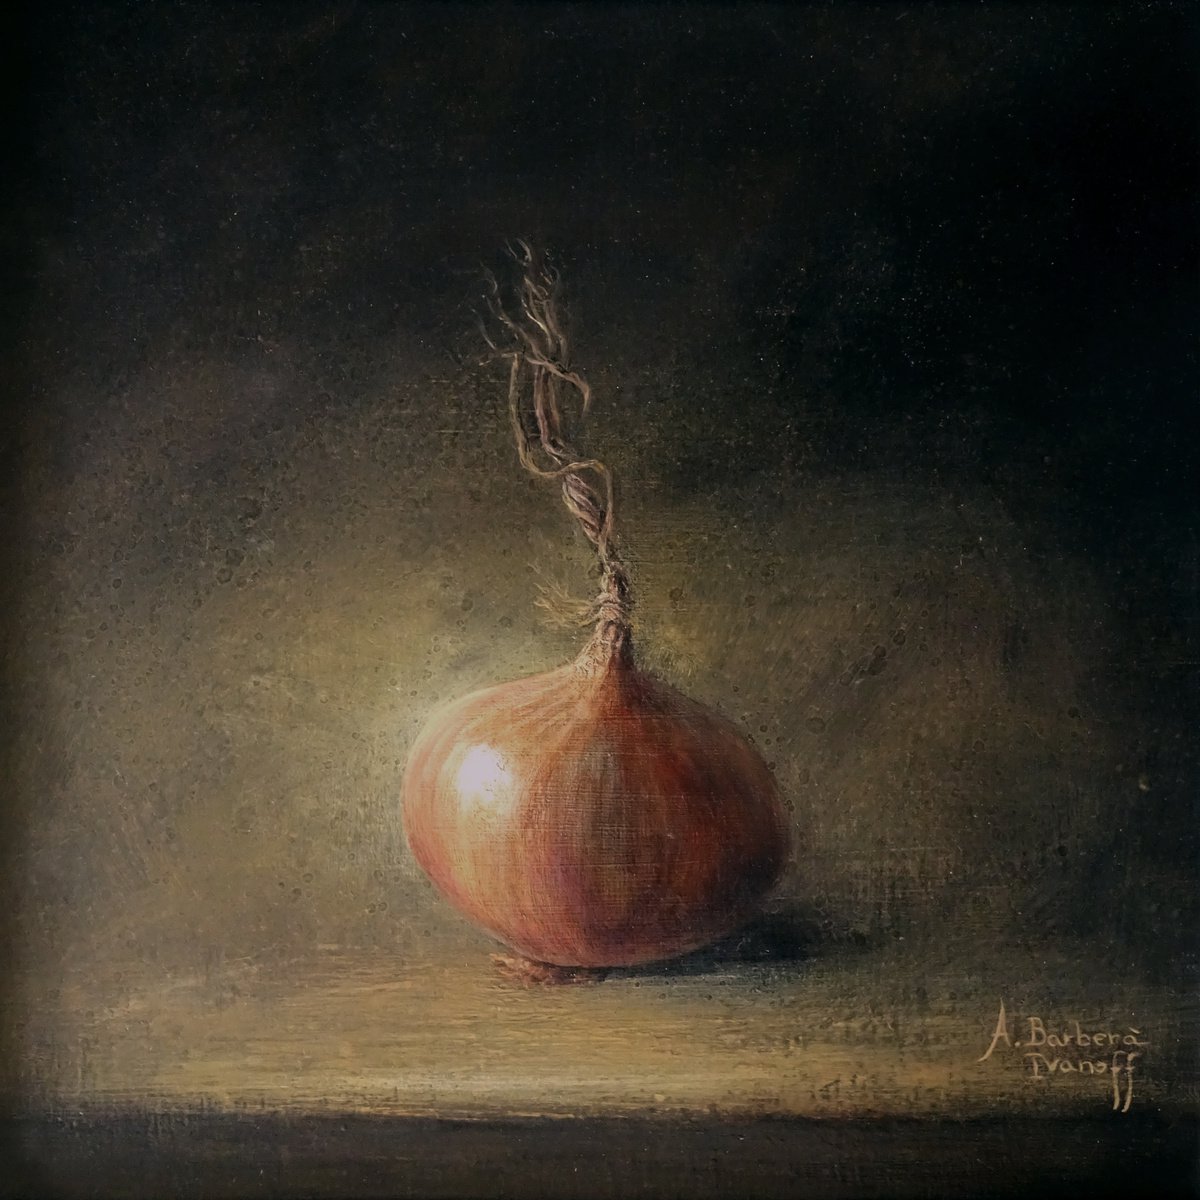 Onion by Alexandre Barbera-Ivanoff